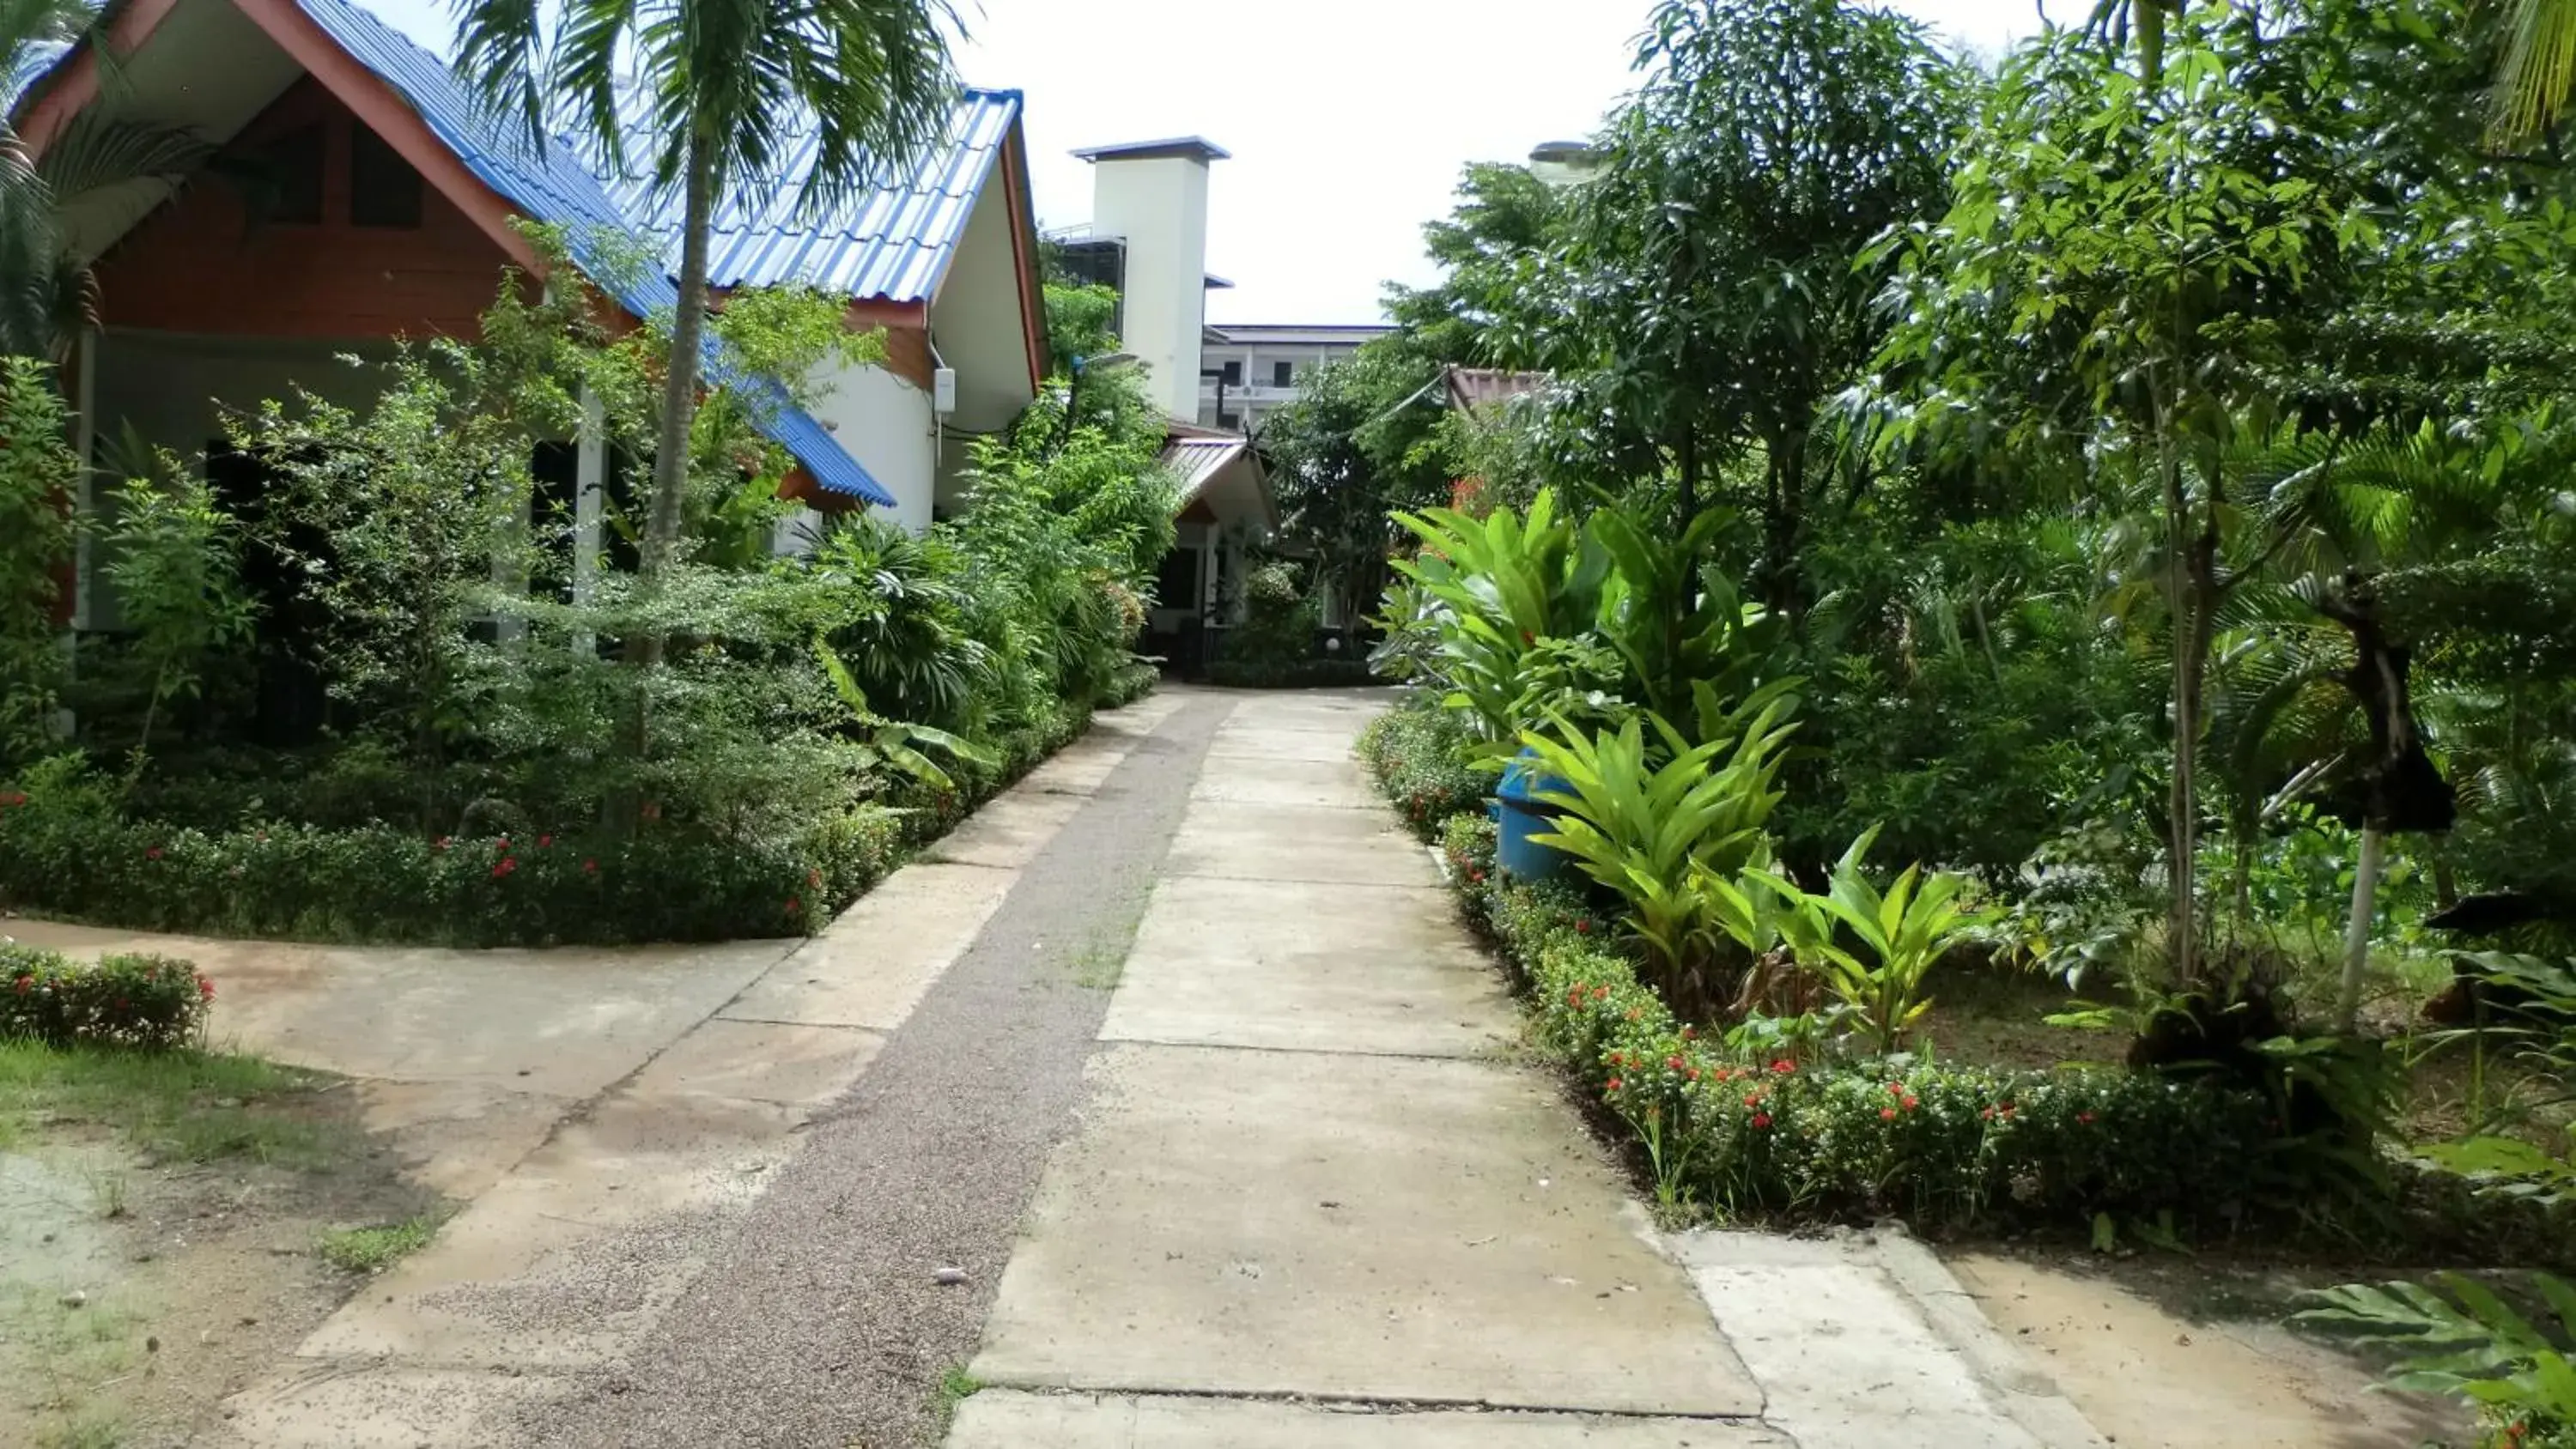 Garden in The Krabi Forest Homestay